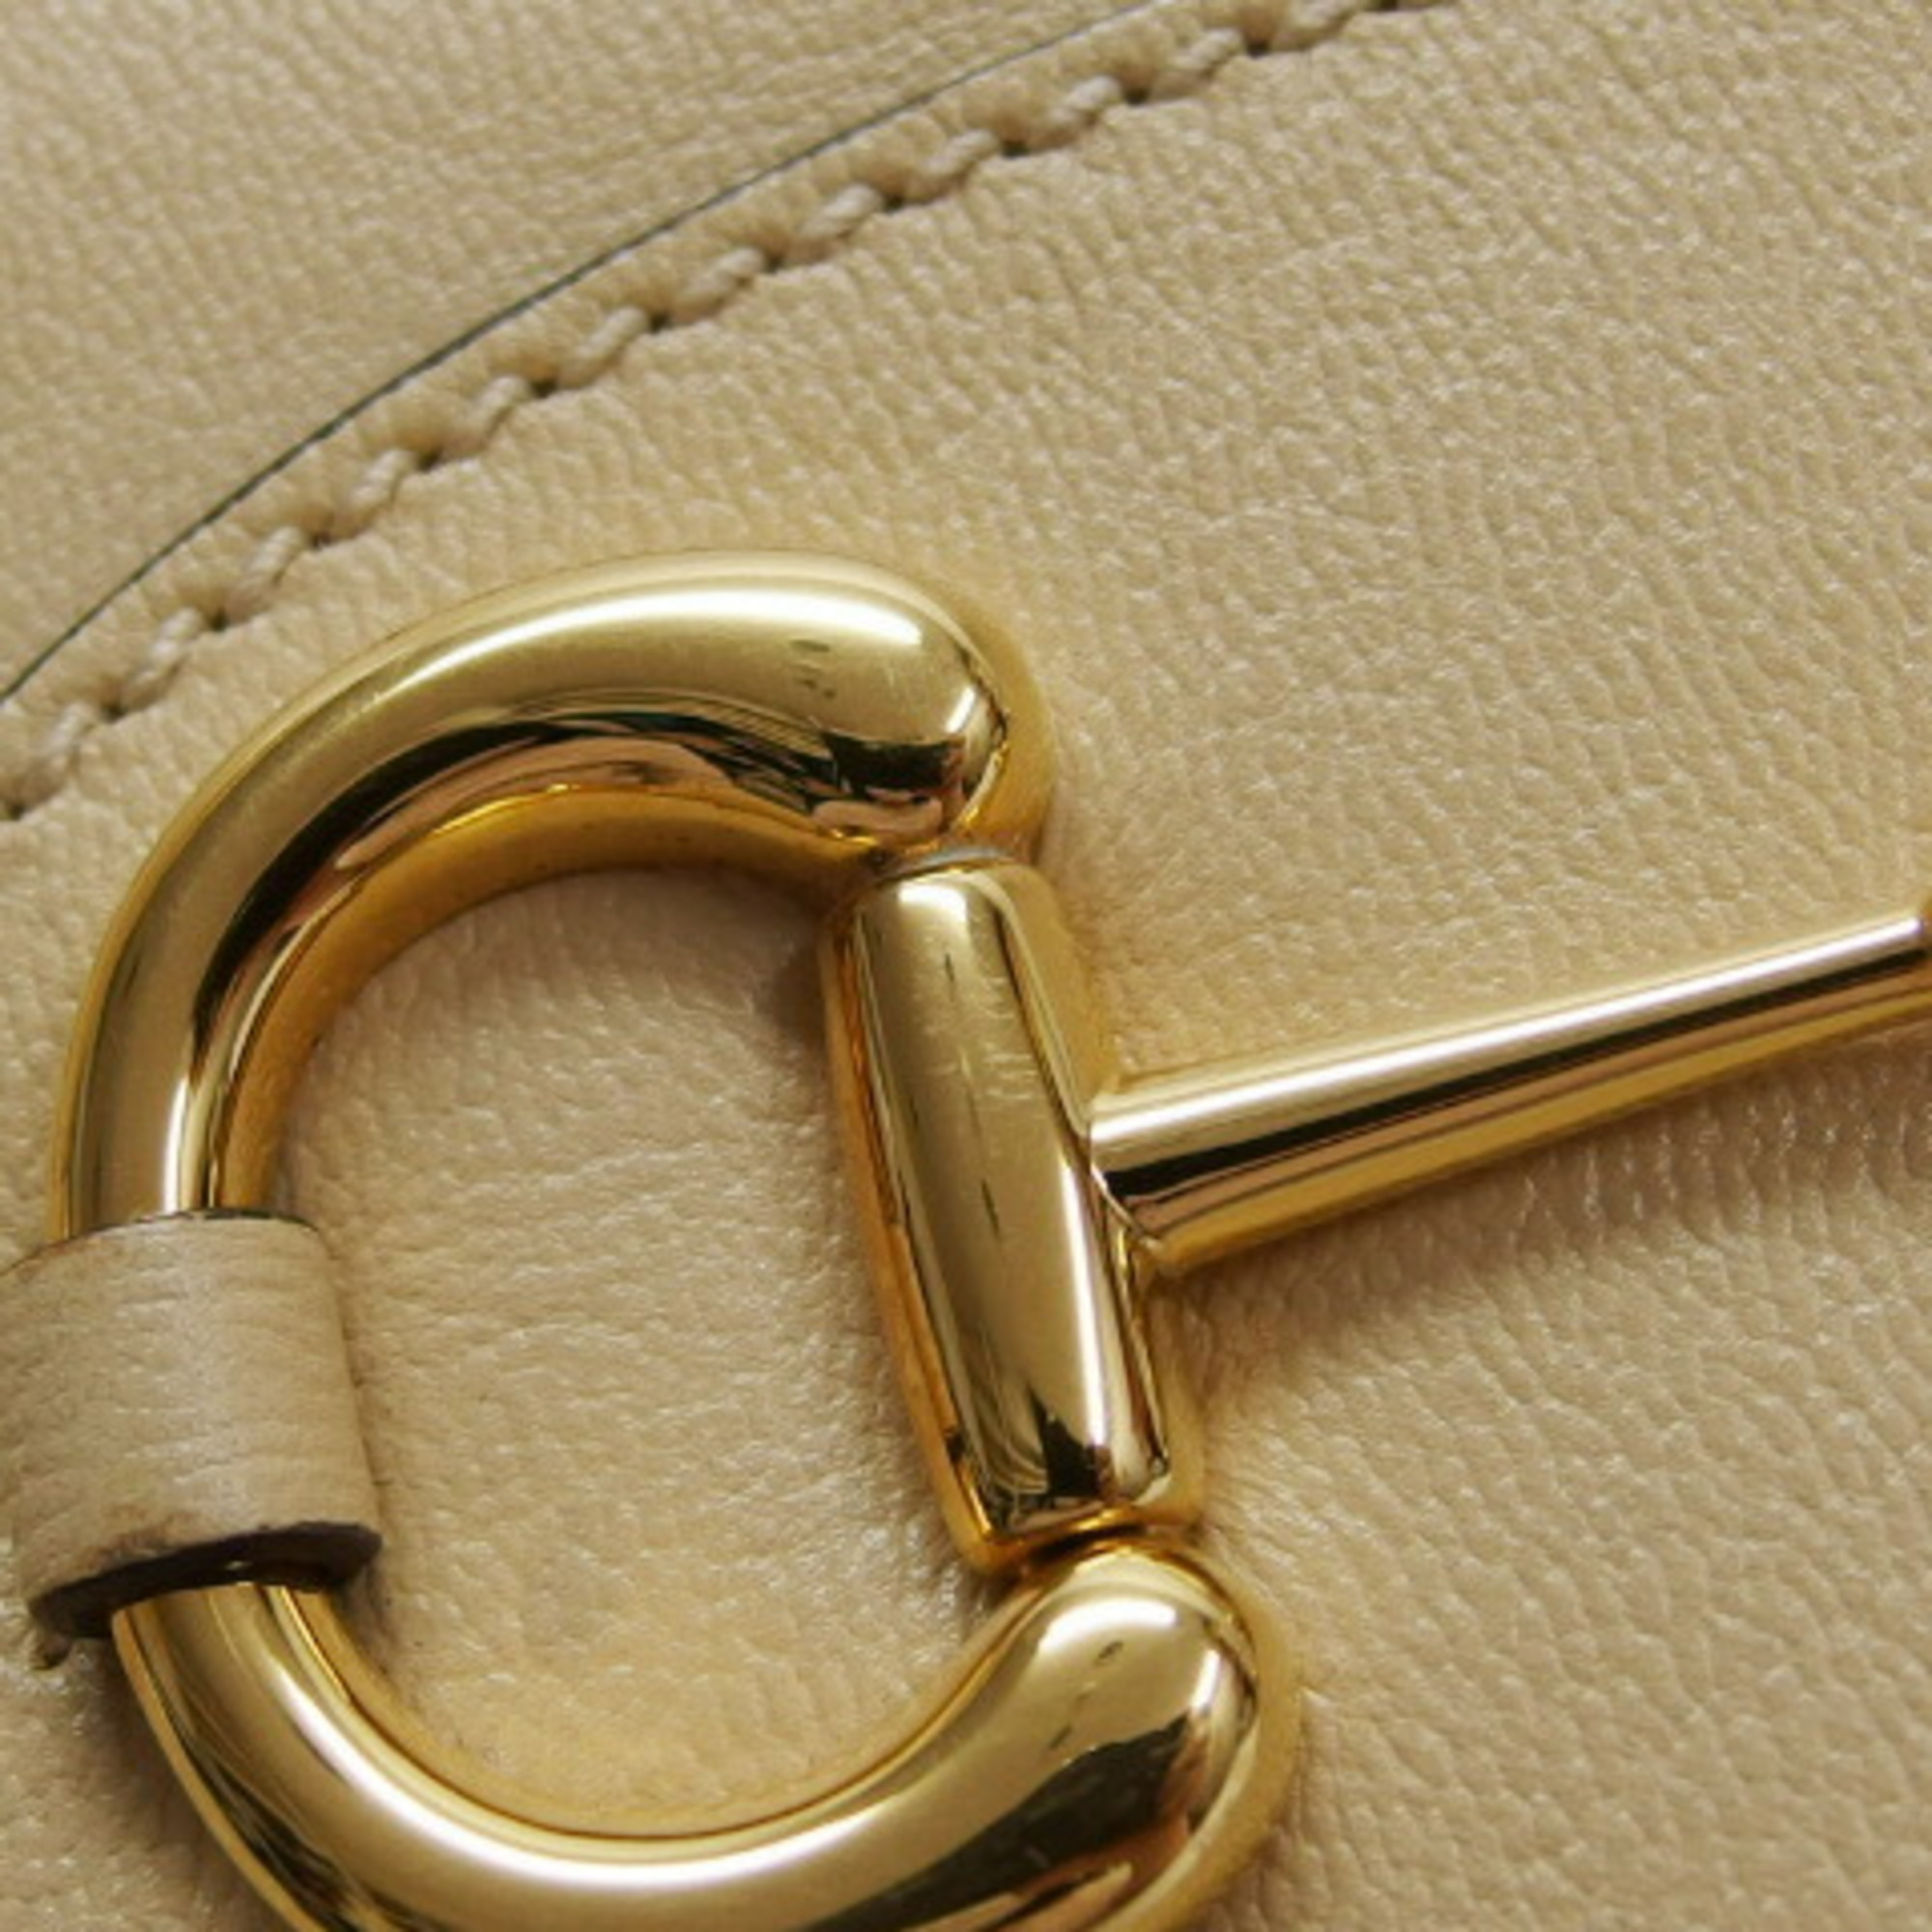 Gucci Horsebit 1955 Leather Tote Bag Beige